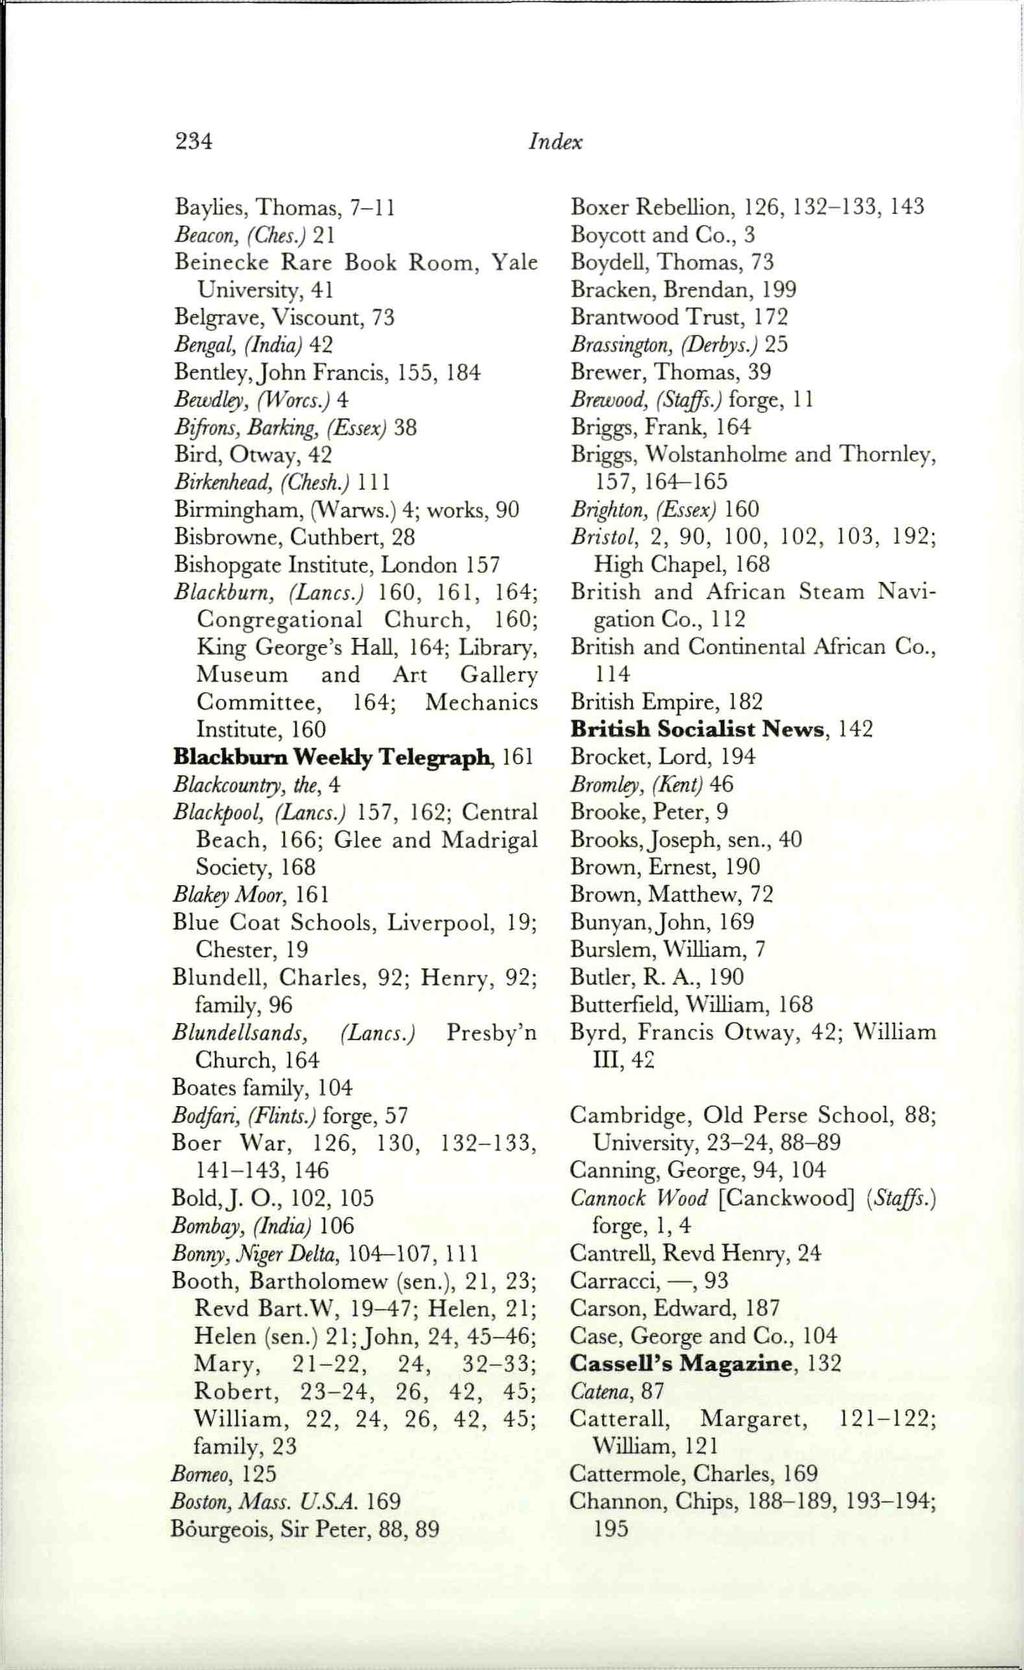 234 Index Baylies, Thomas, 7-11 Beacon, (dies.) 21 Beinecke Rare Book Room, Yale University, 41 Belgrave, Viscount, 73 Bengal, (India) 42 Bentley, John Francis, 155, 184 Bewdley, (Worcs.